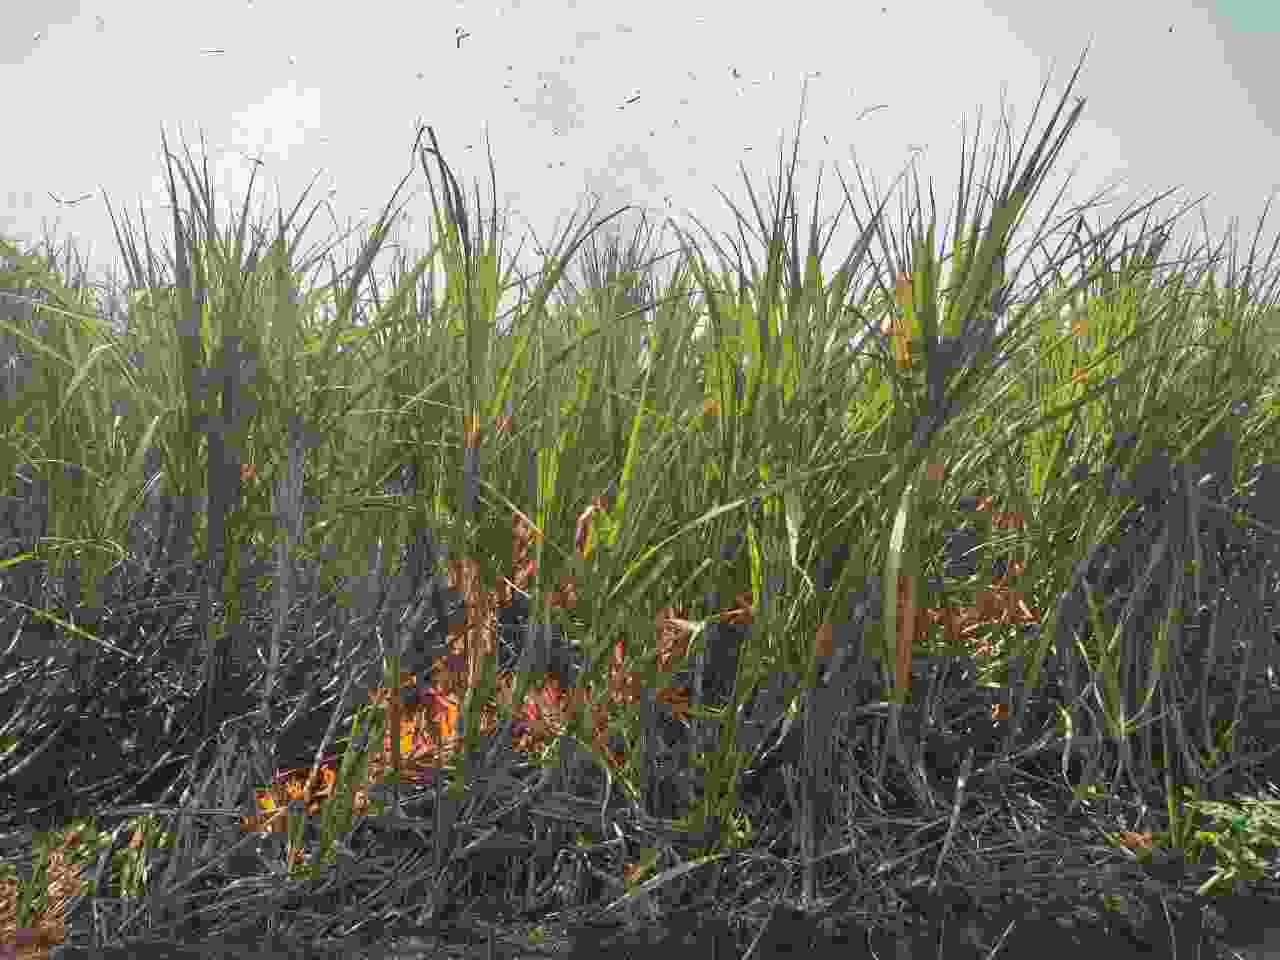 Burn seven acres of sugarcane in Ganore